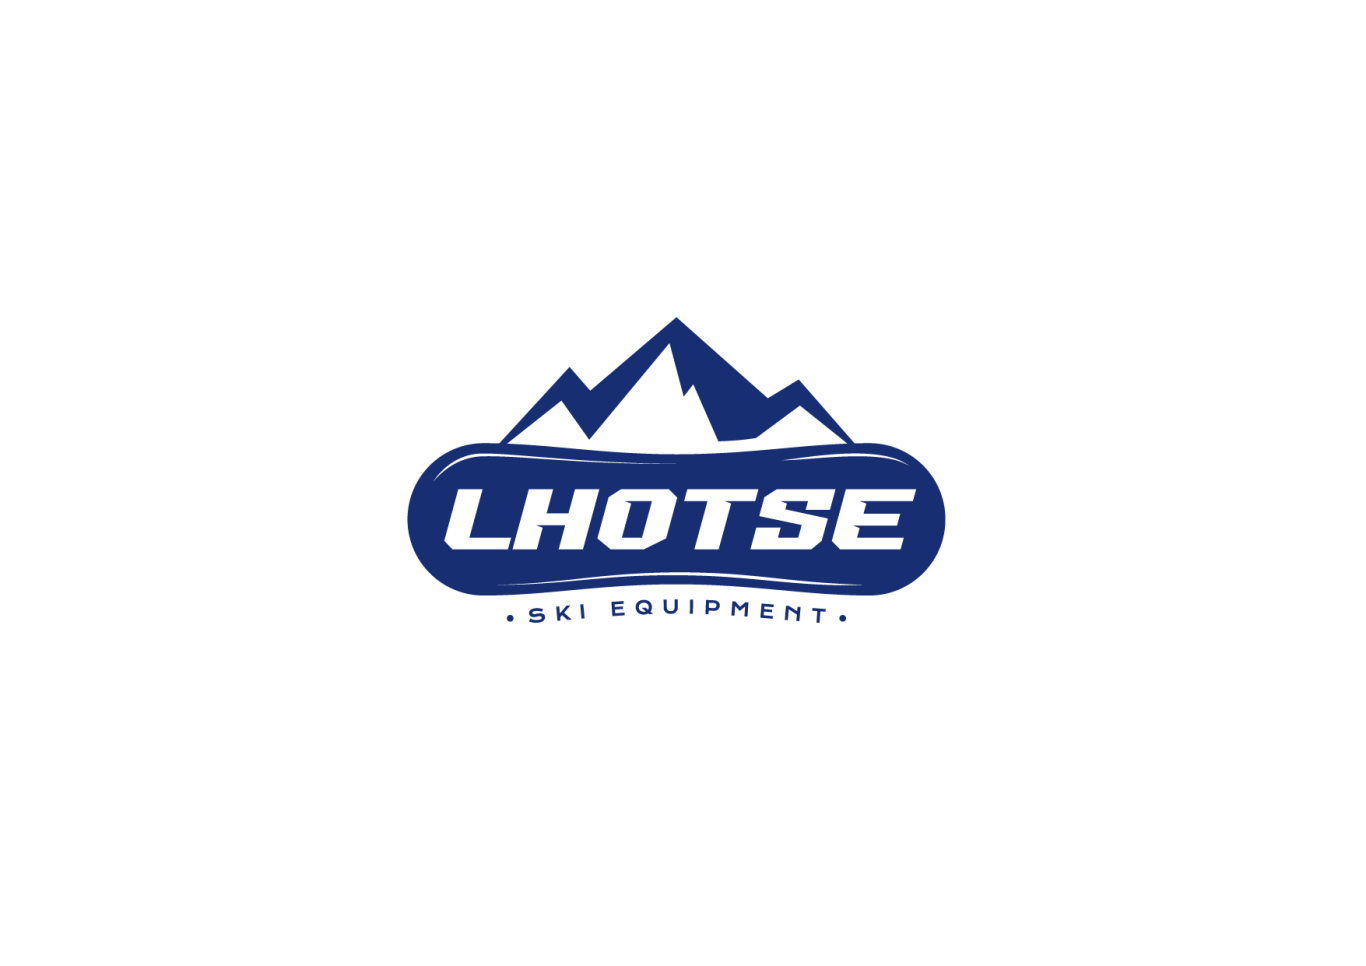 Lhotse滑雪器材logo設計圖0